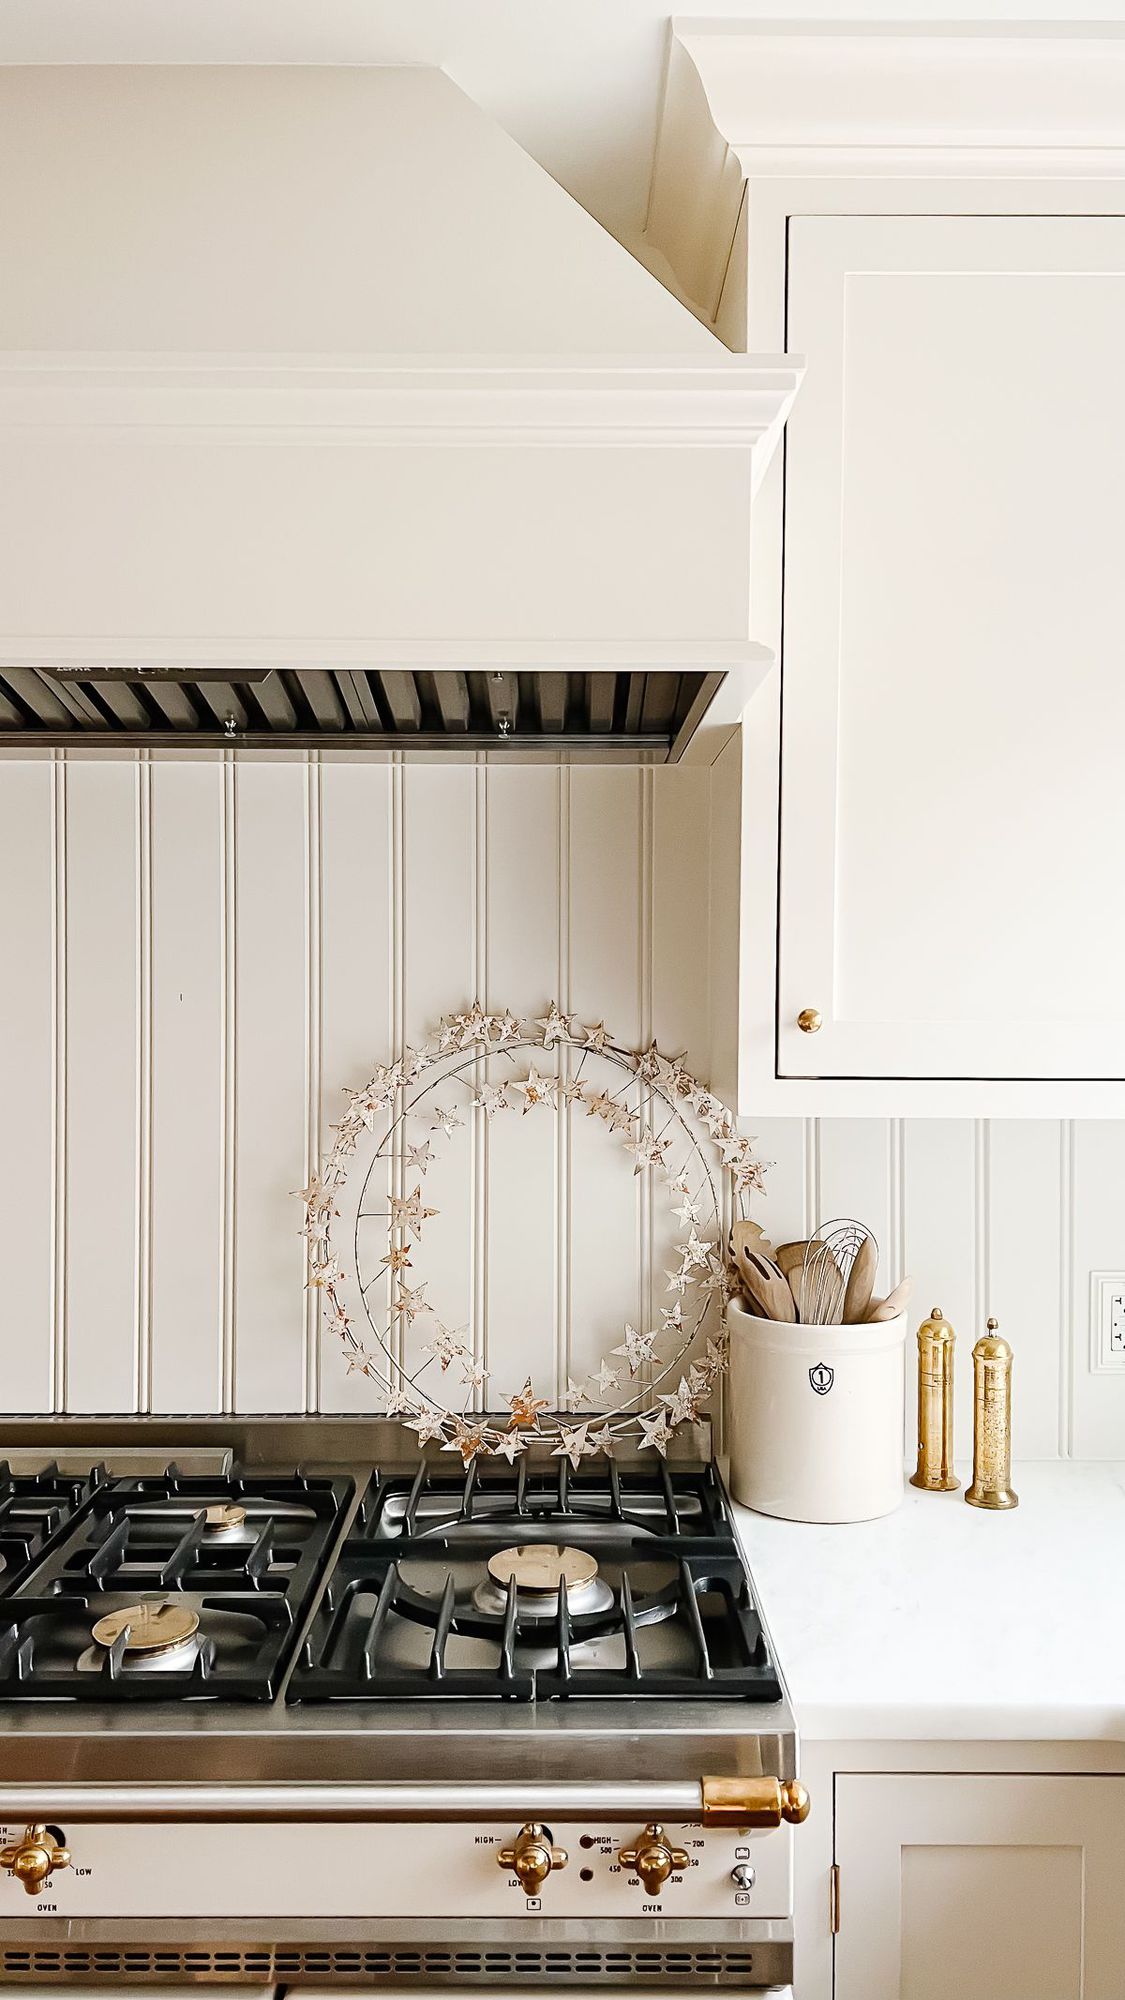 A metal star wreath leaning against a backsplash in a cream kitchen